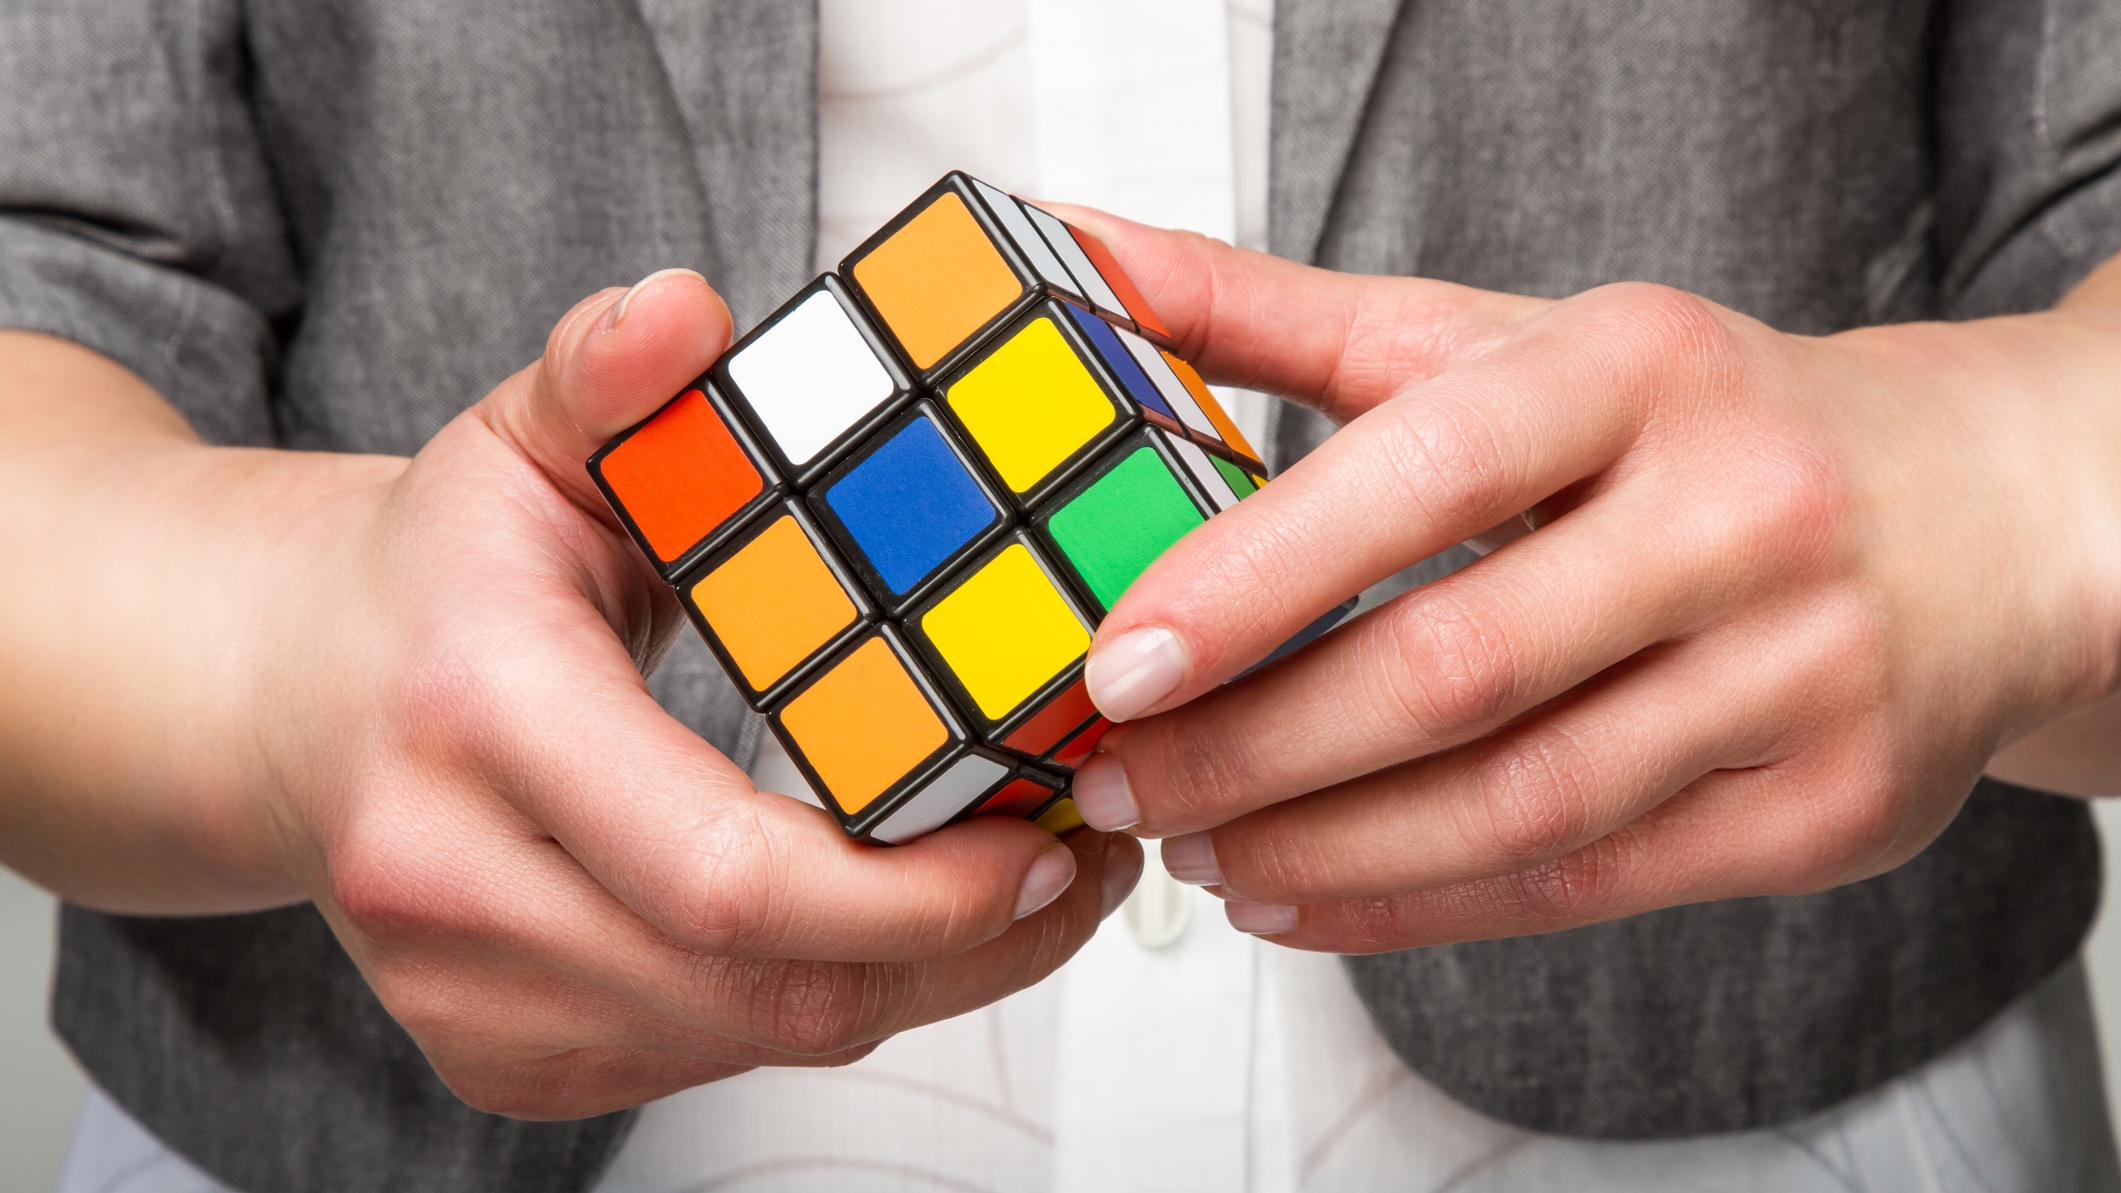 Rubik's cube world record